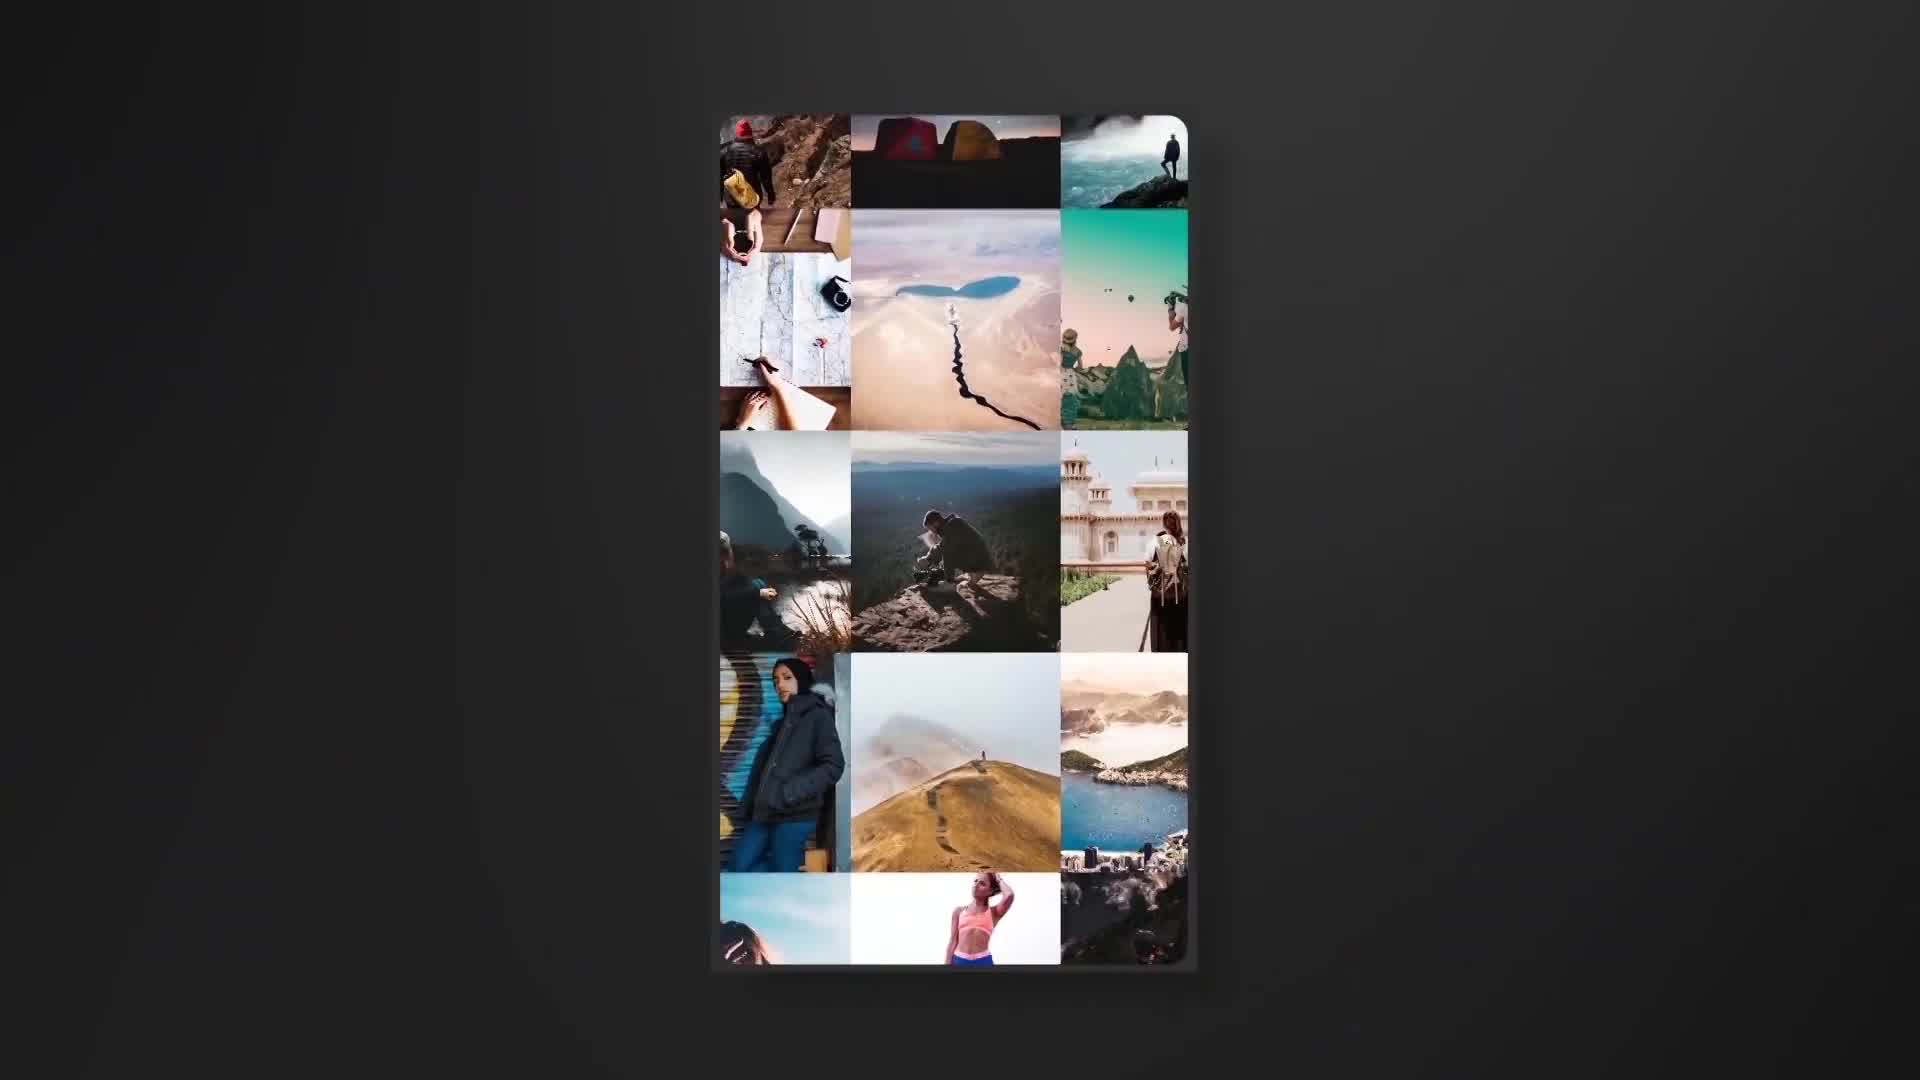 Travel Instagram Stories - Download Videohive 23150027